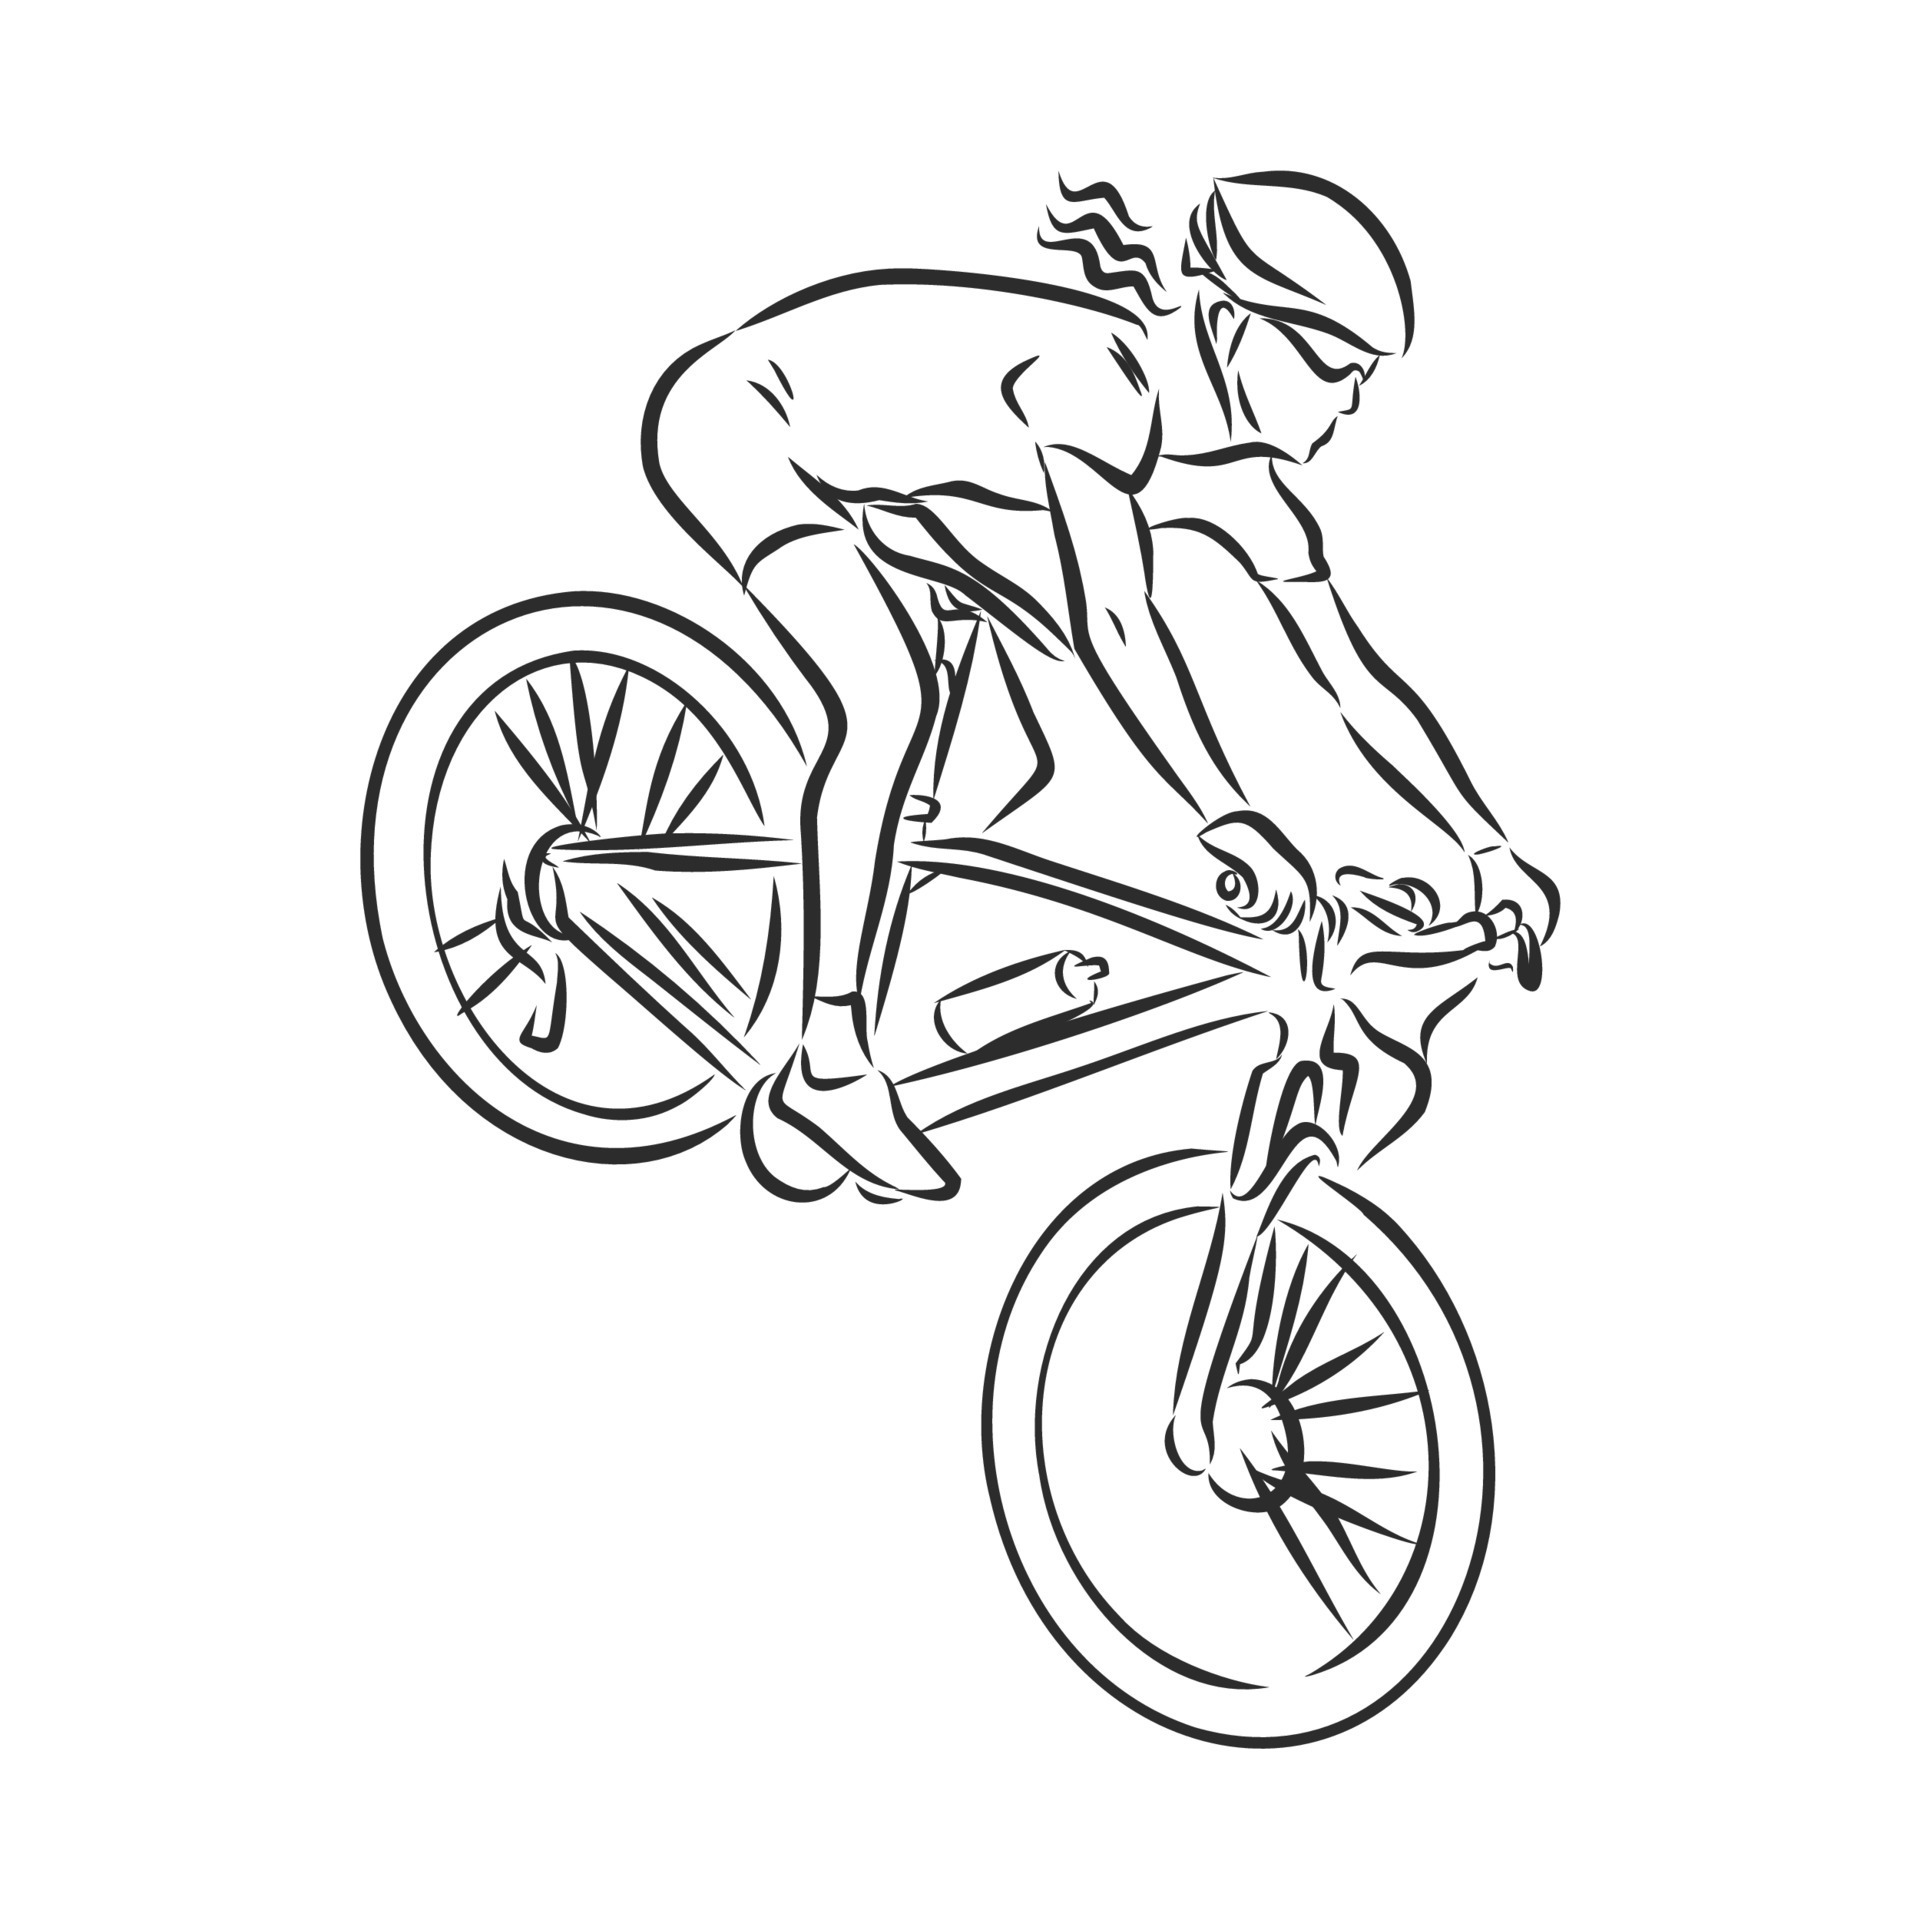 Autocad drawing Enduro mountain bike MTB Downhill bicycle rims 29 dwg